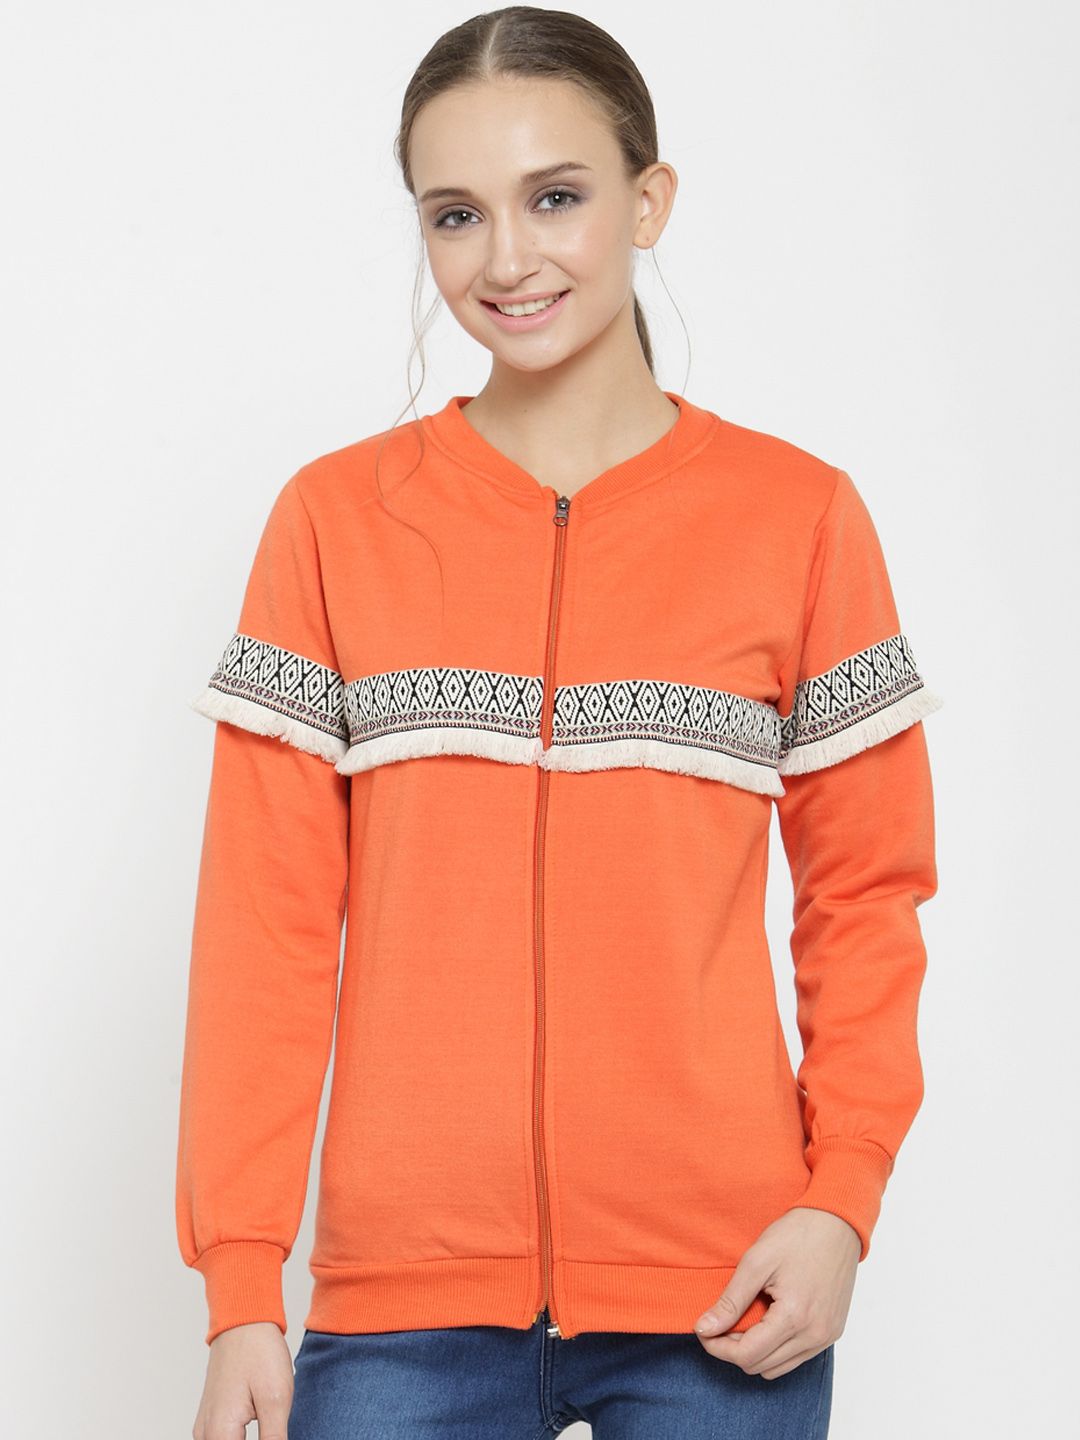 Belle Fille Women Orange Printed Sweatshirt Price in India